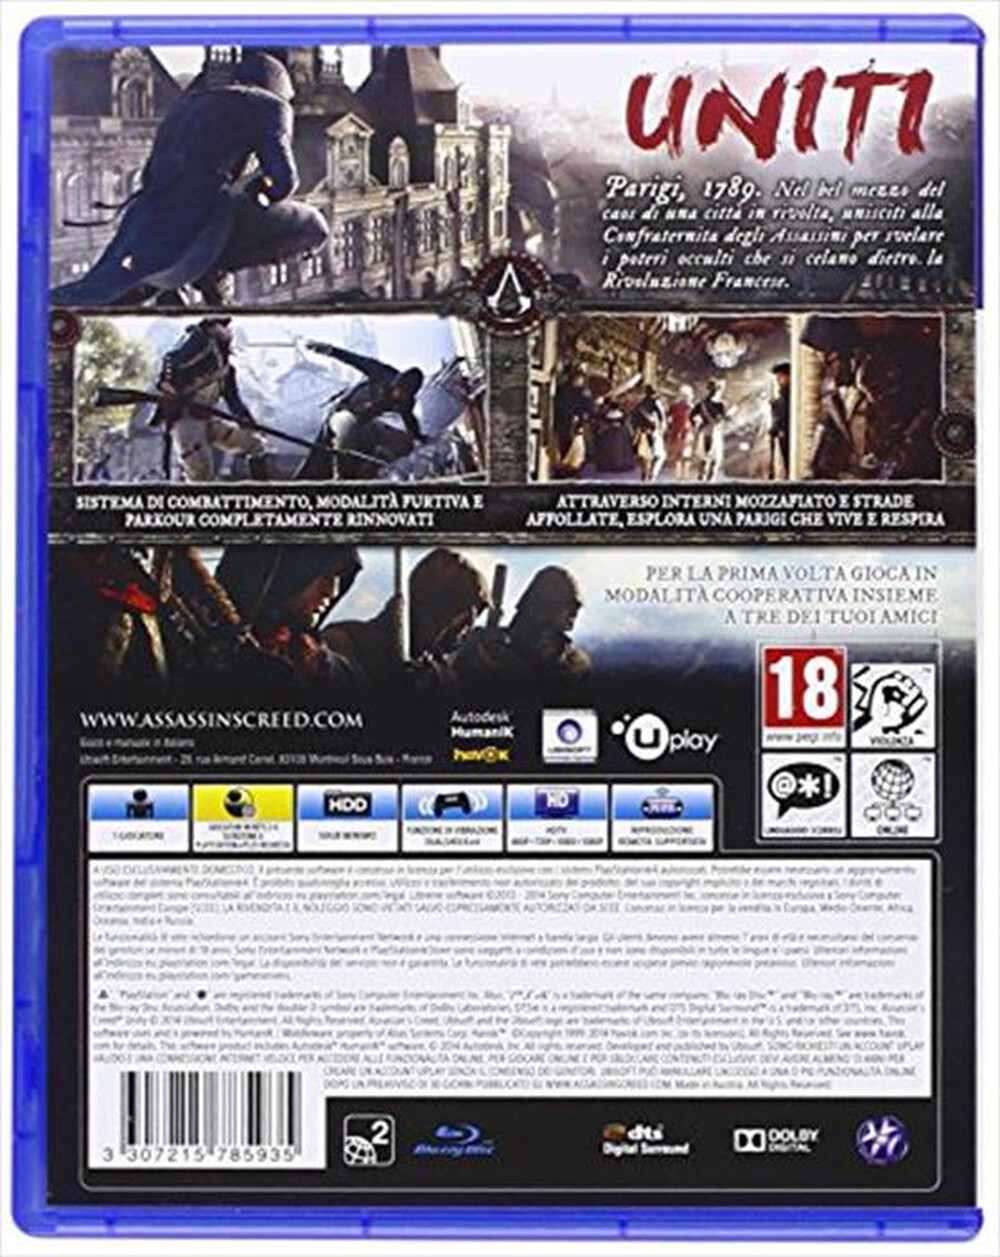 "UBISOFT - Assassins Creed Unity Ps4 - "